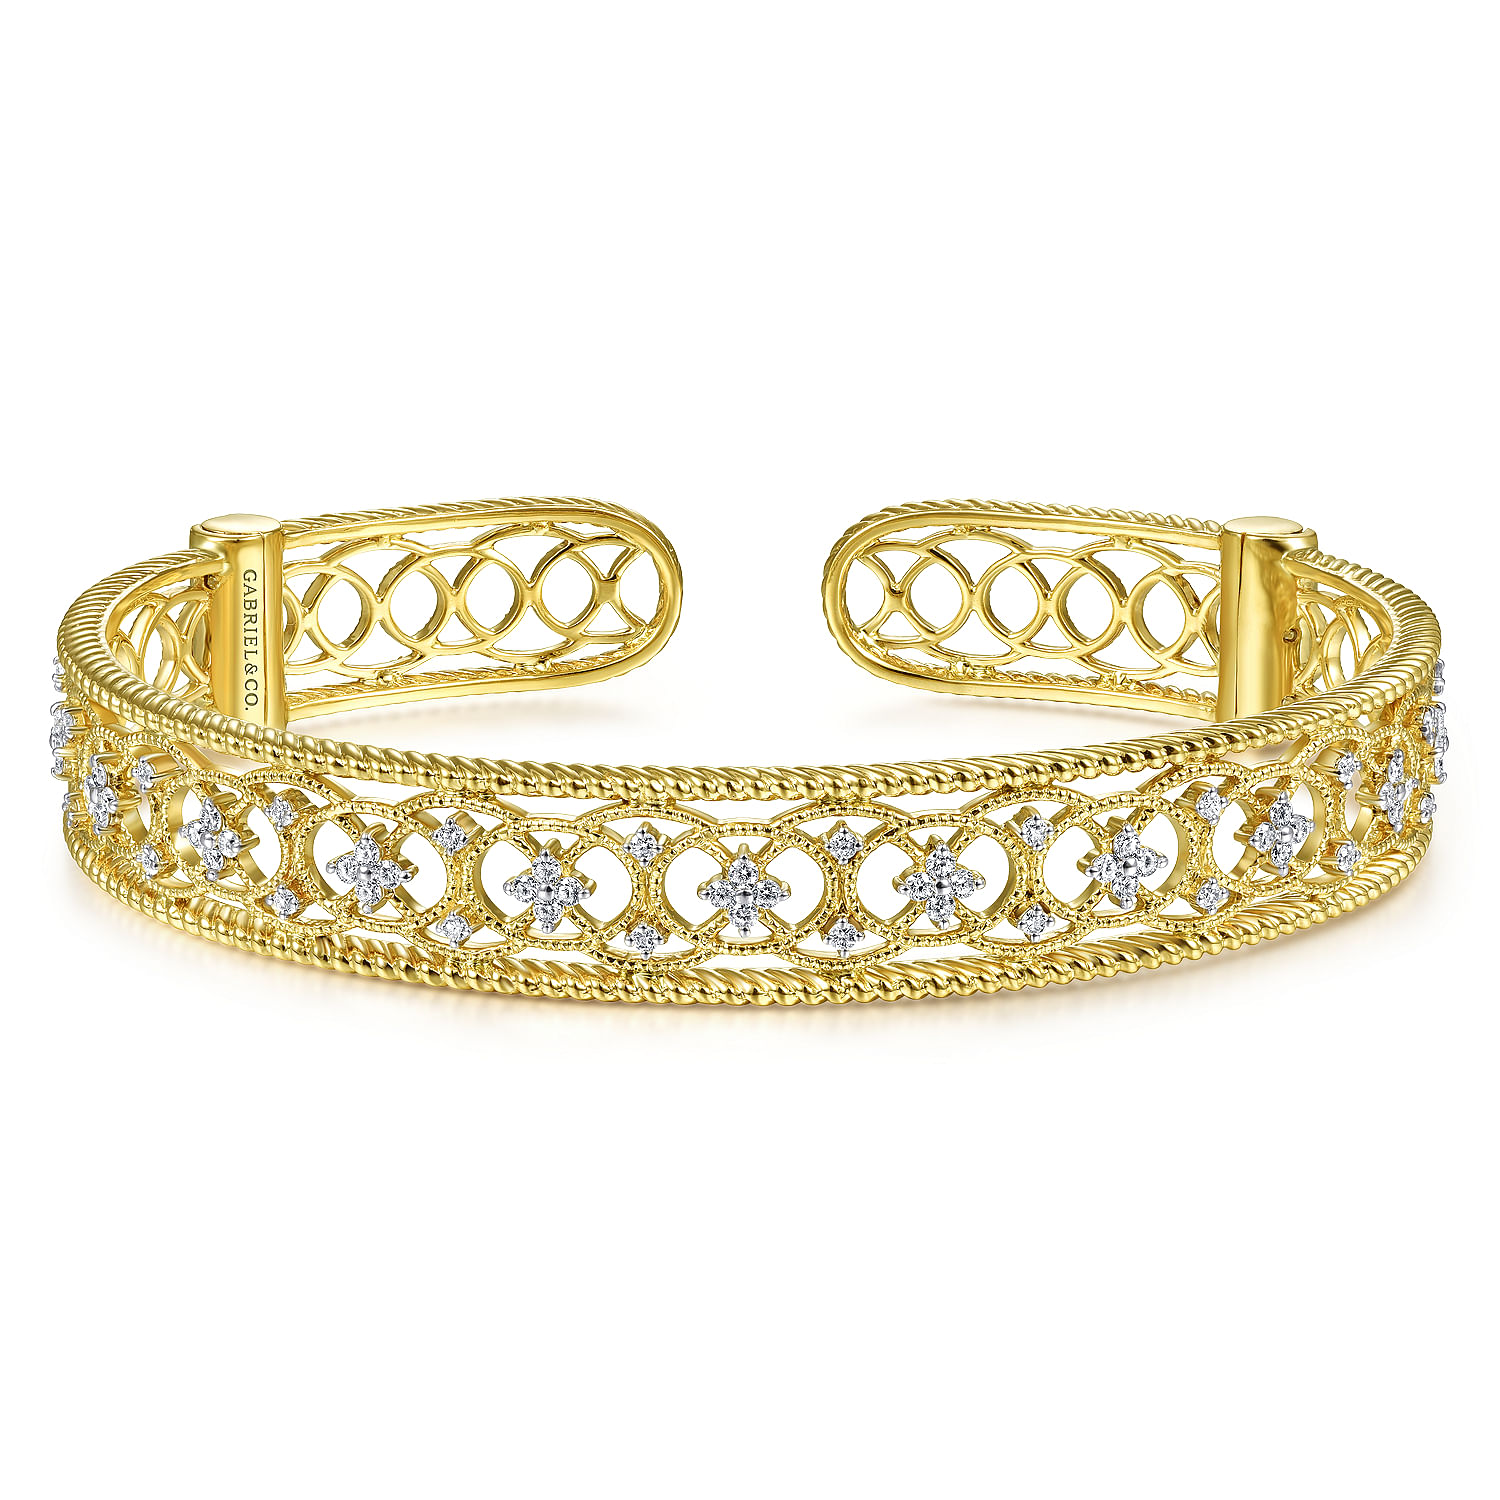 Gabriel - Vintage Inspired 14K Yellow Gold Filigree Diamond Cuff Bracelet